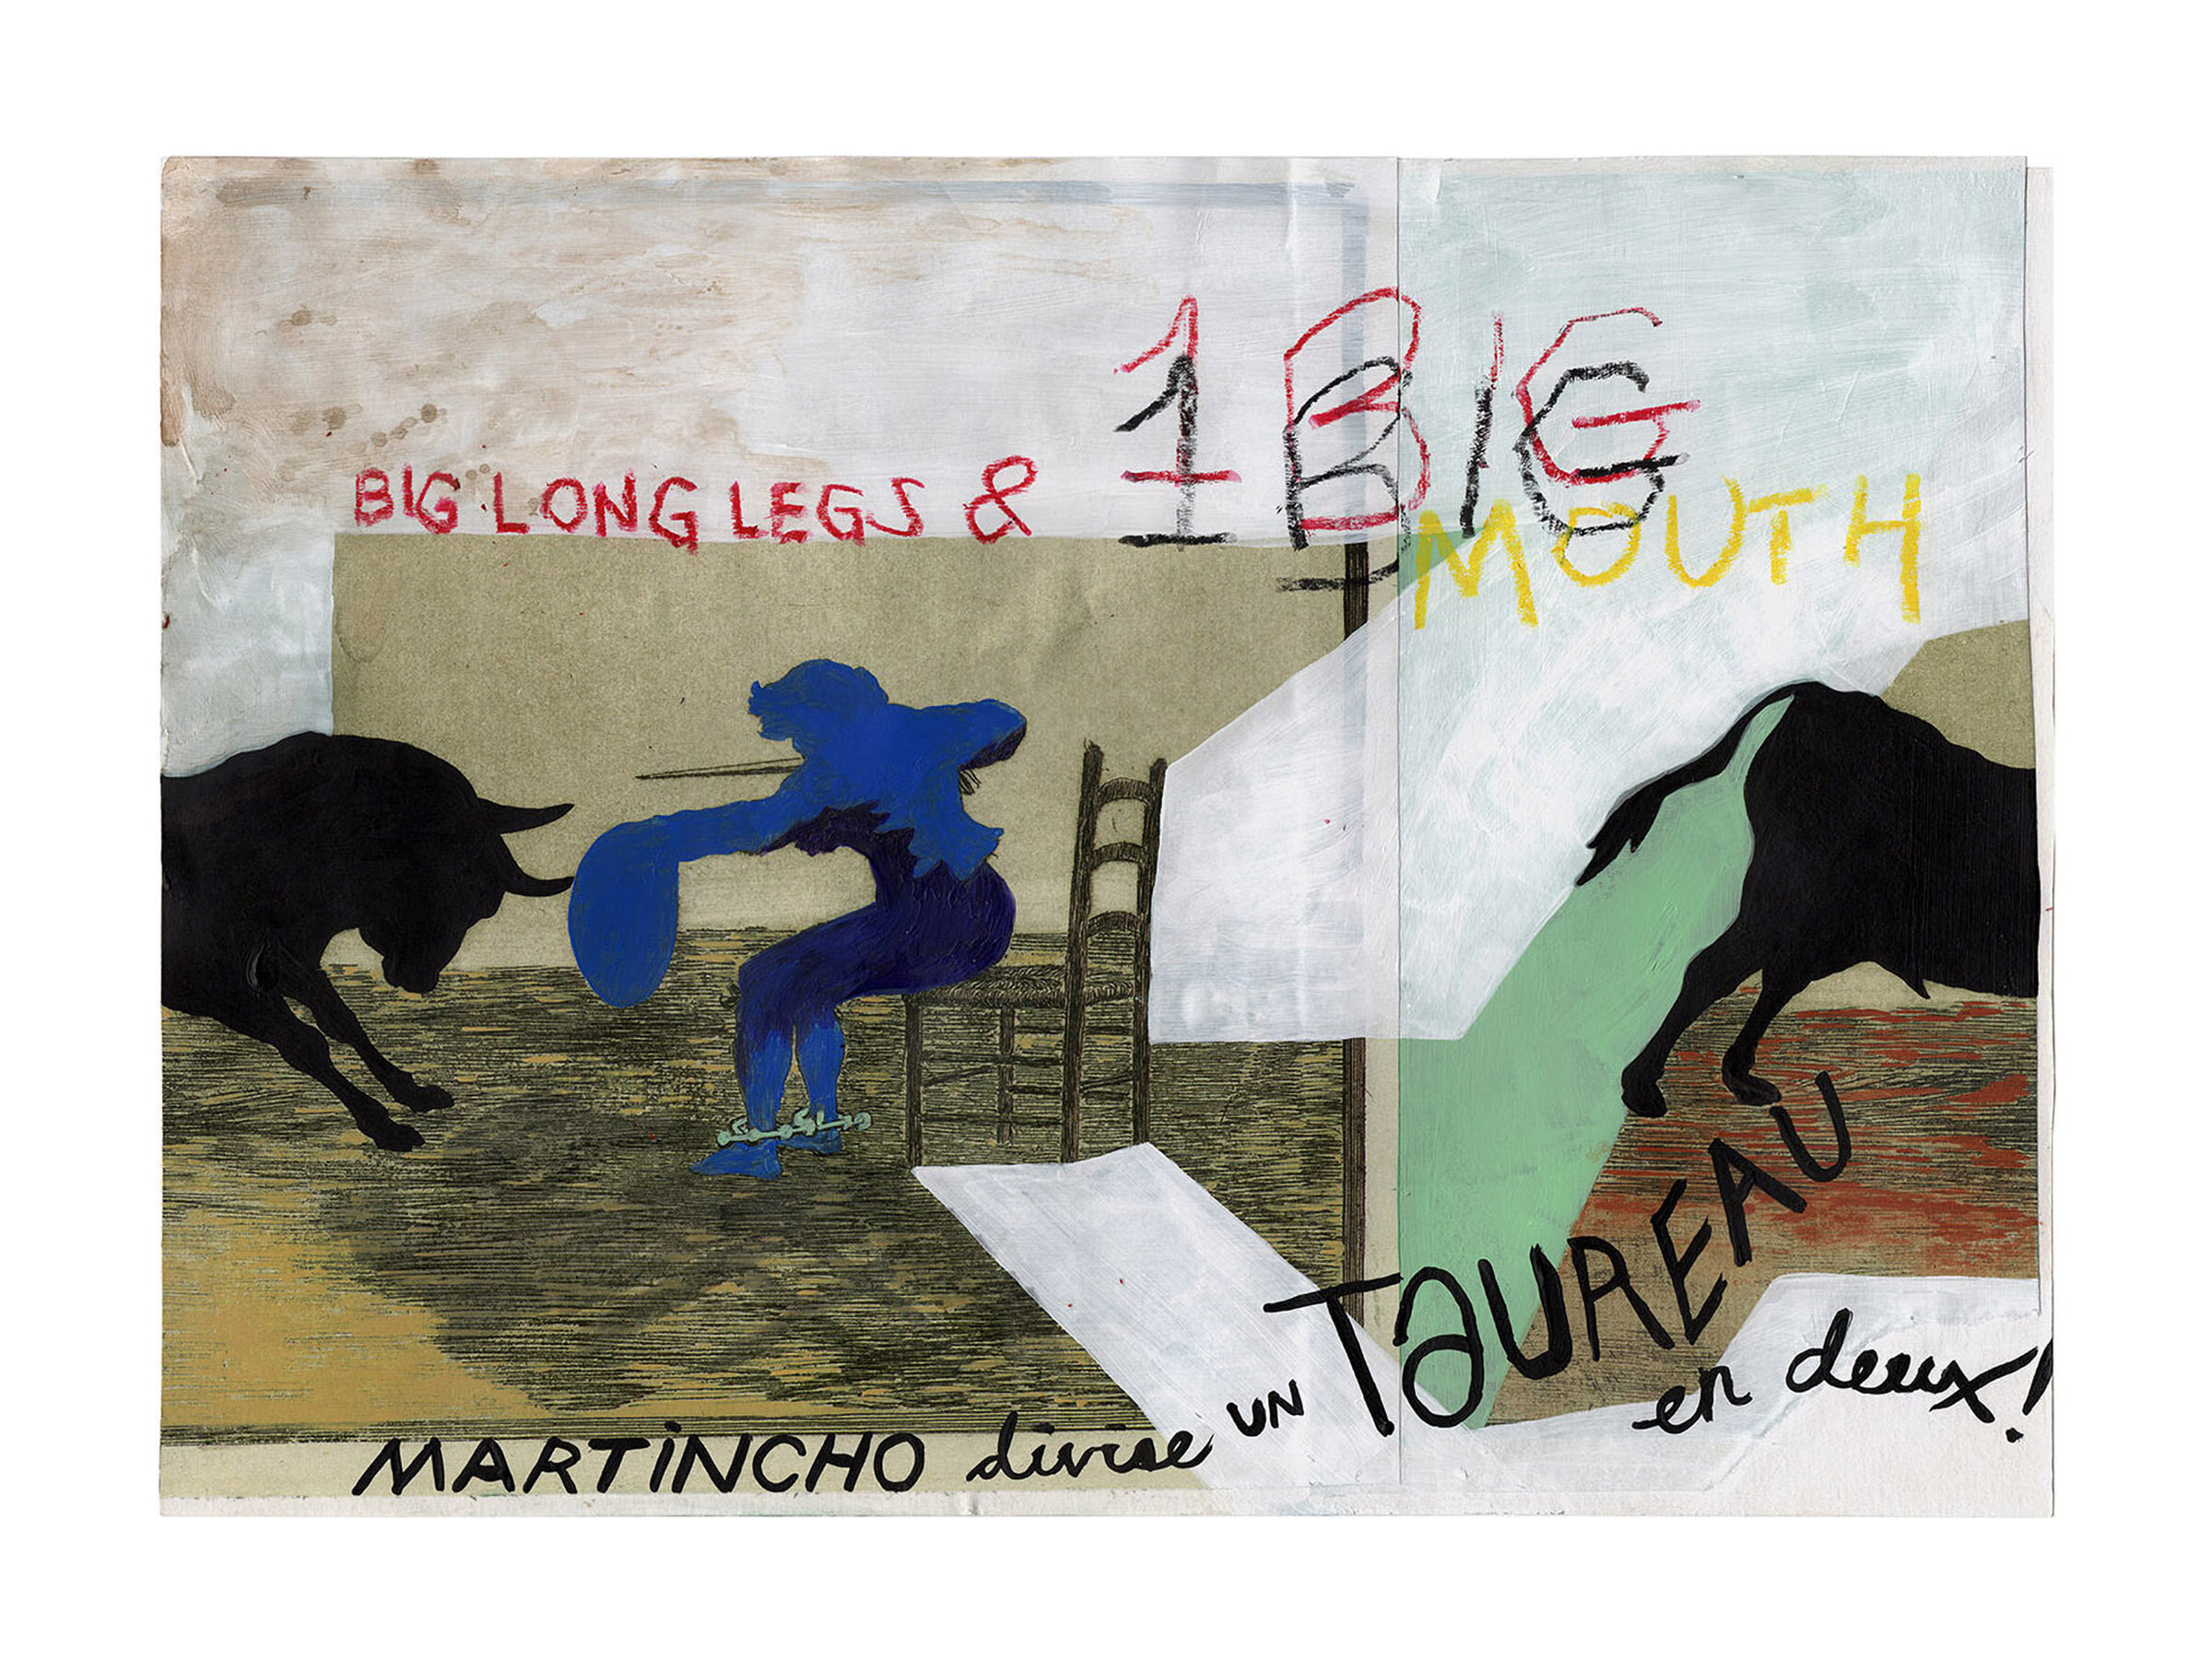   Martincho divese un taureau en deux!  Acrylic, crayon, ink and collage on paper 10 x 14 inches 2019 